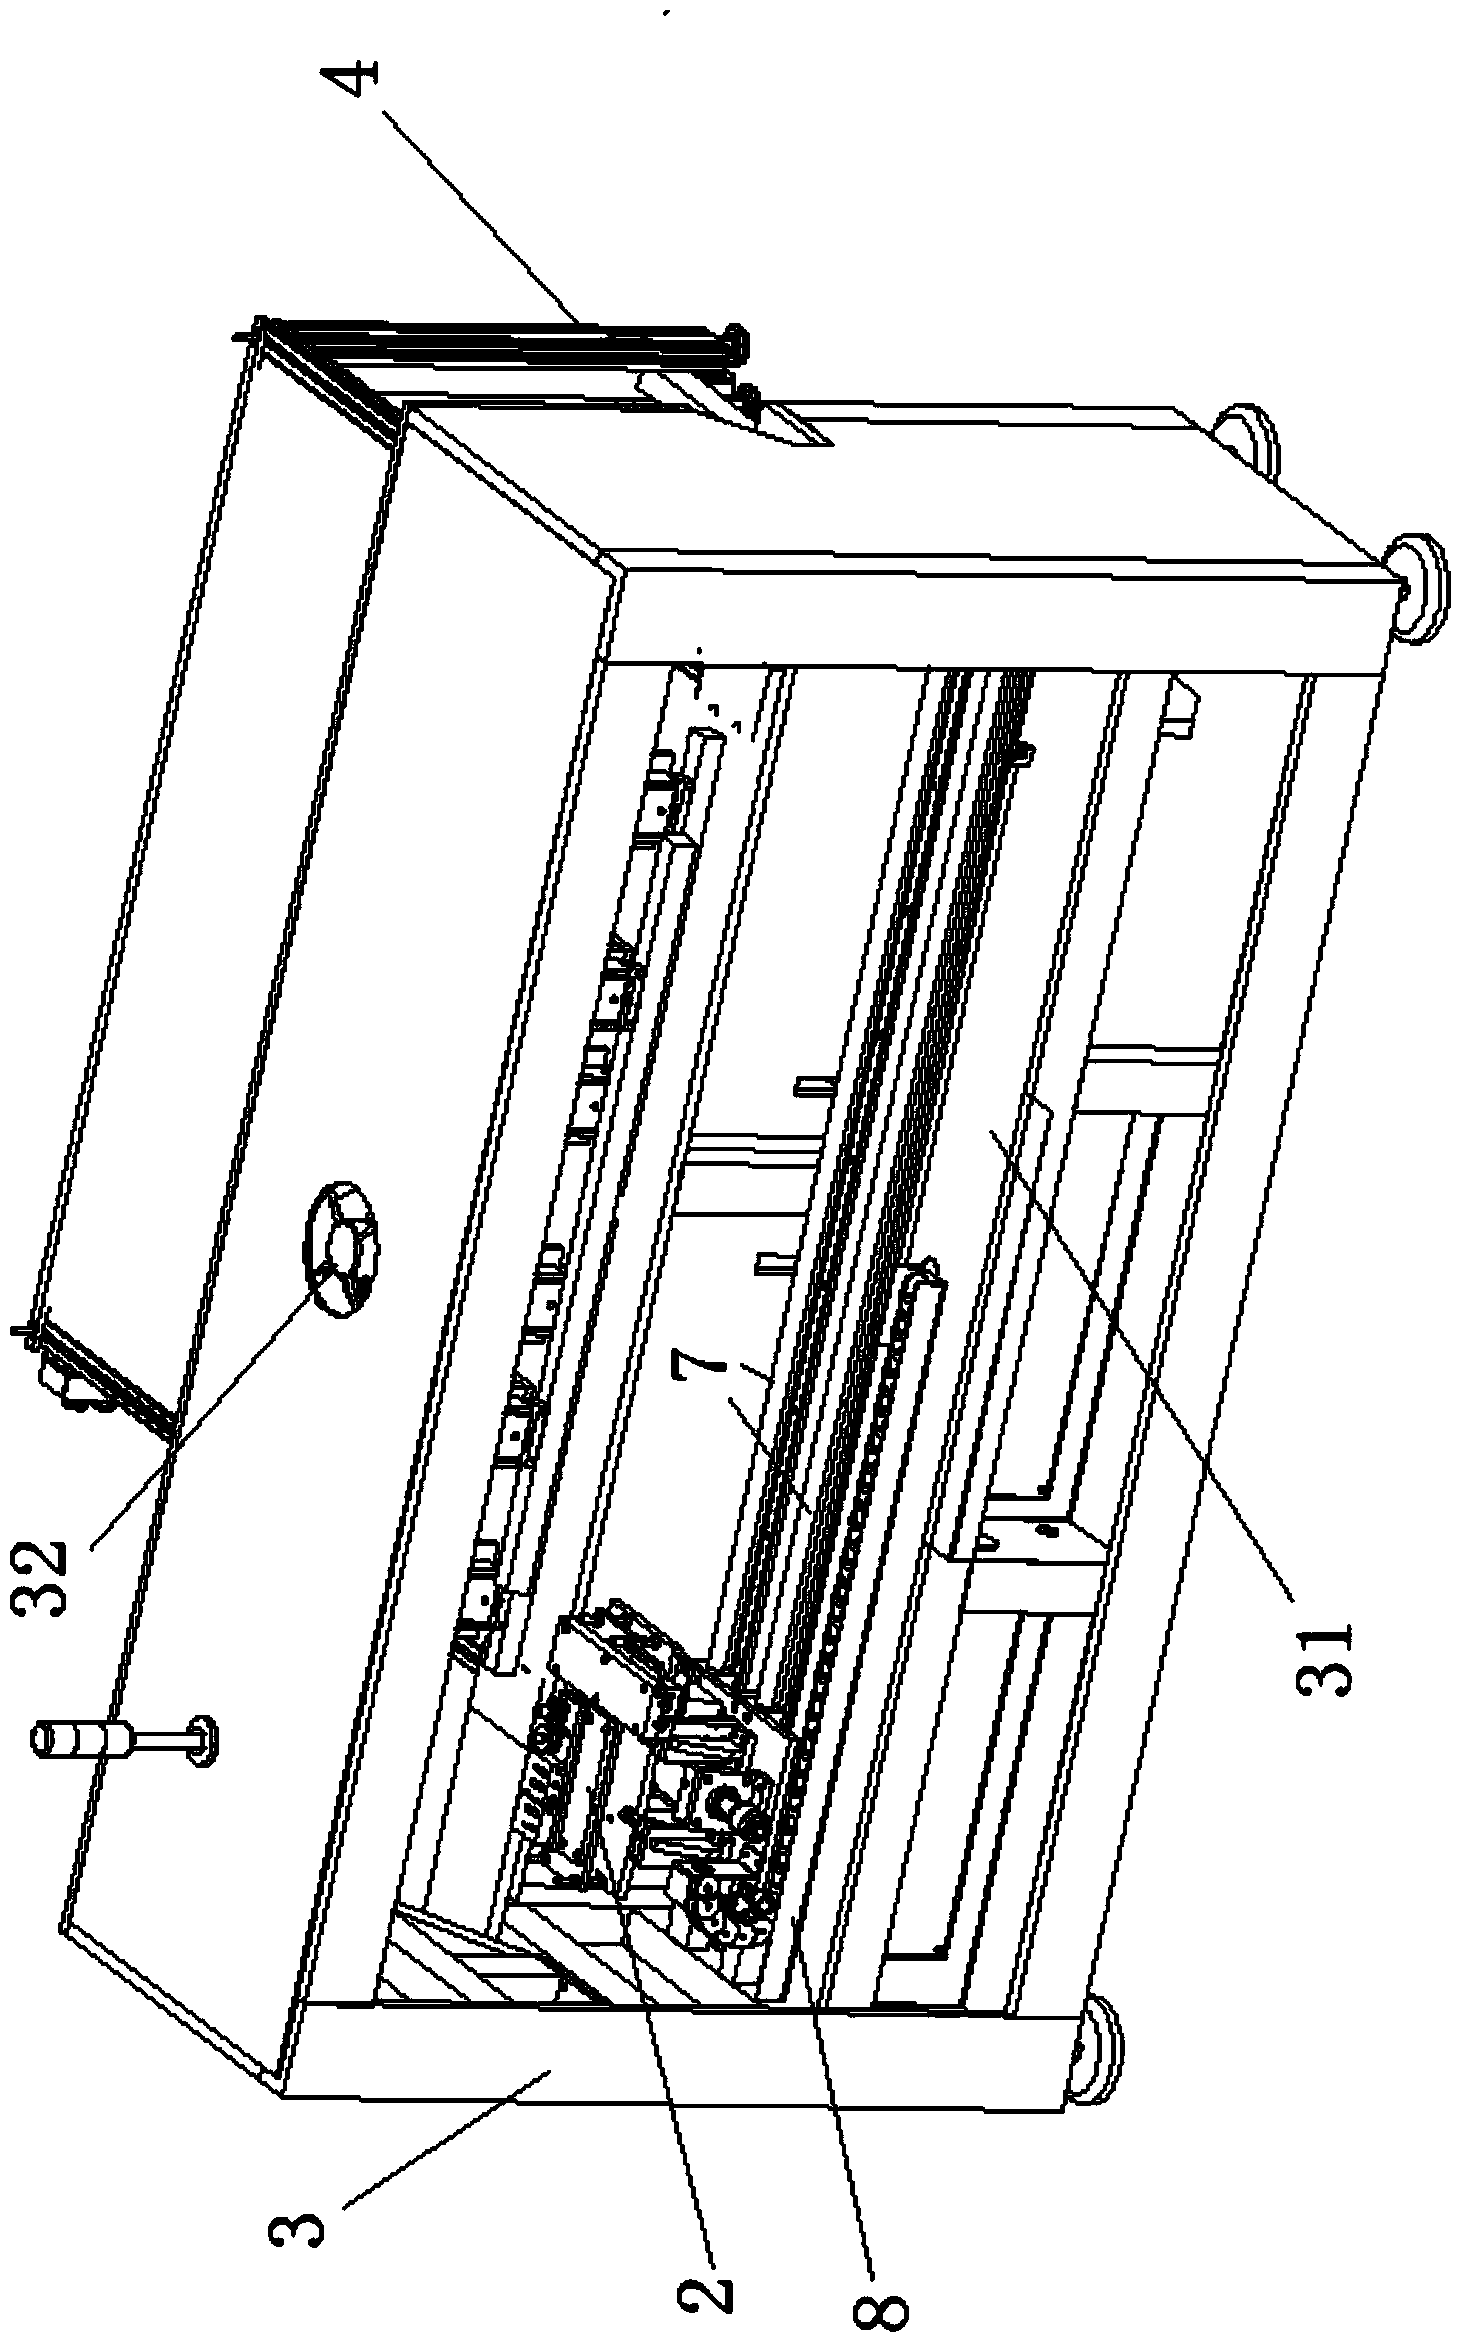 Hollow plate window opening machine